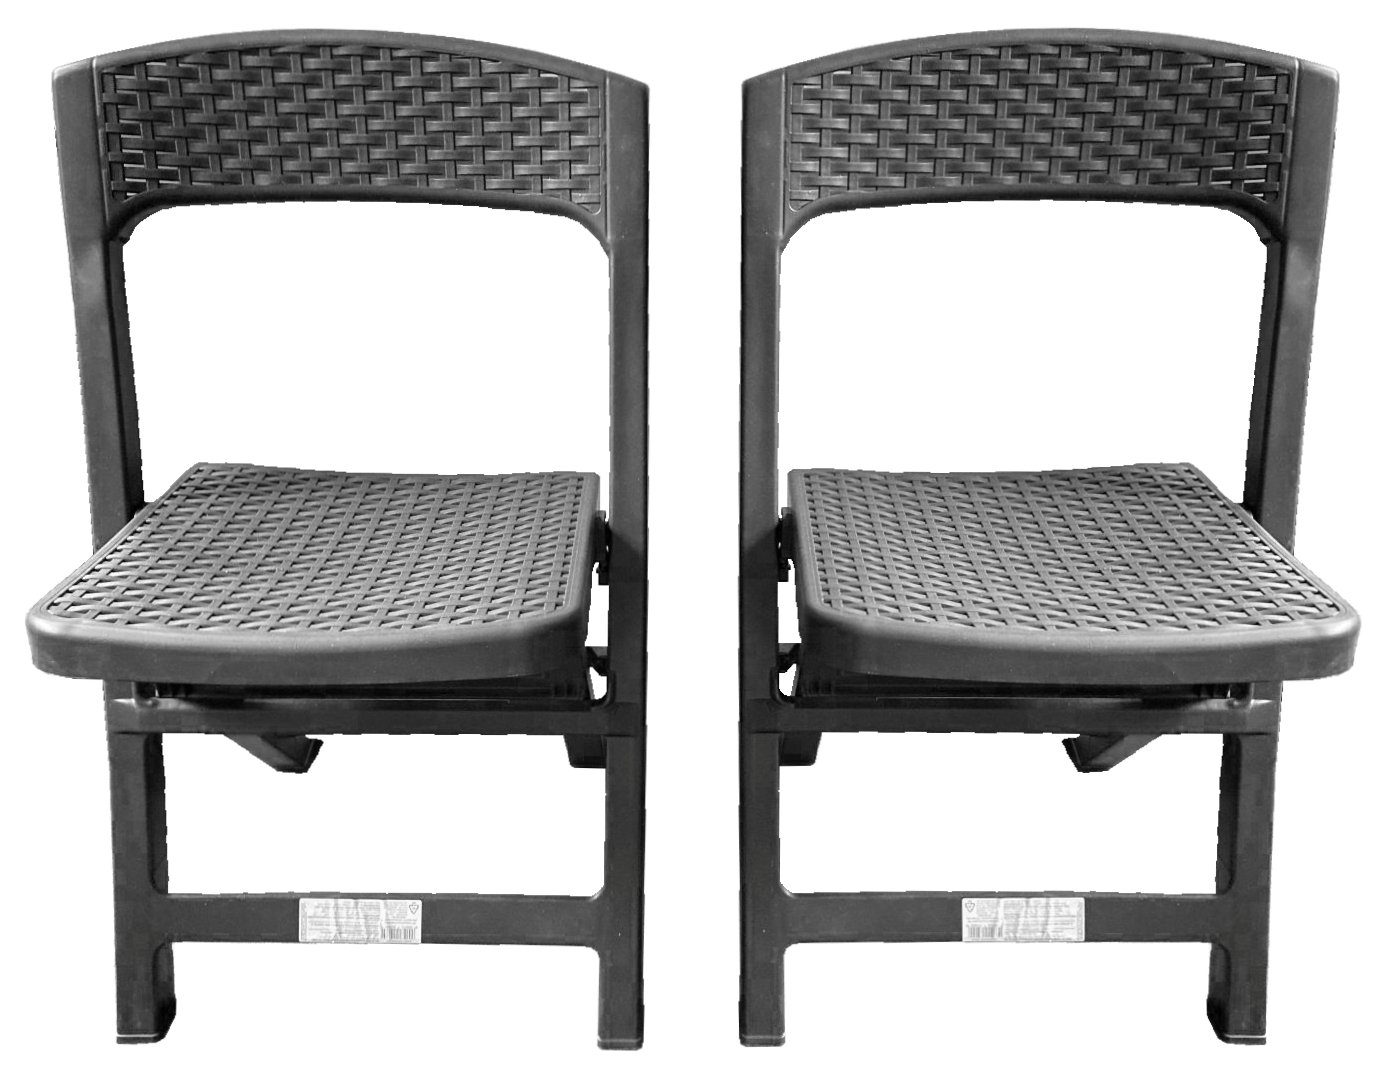 Progarden Klappstuhl 2x 0512 Stuhl, Klappstuhl Kunststoff Gartenstuhl  Campingstuhl leicht